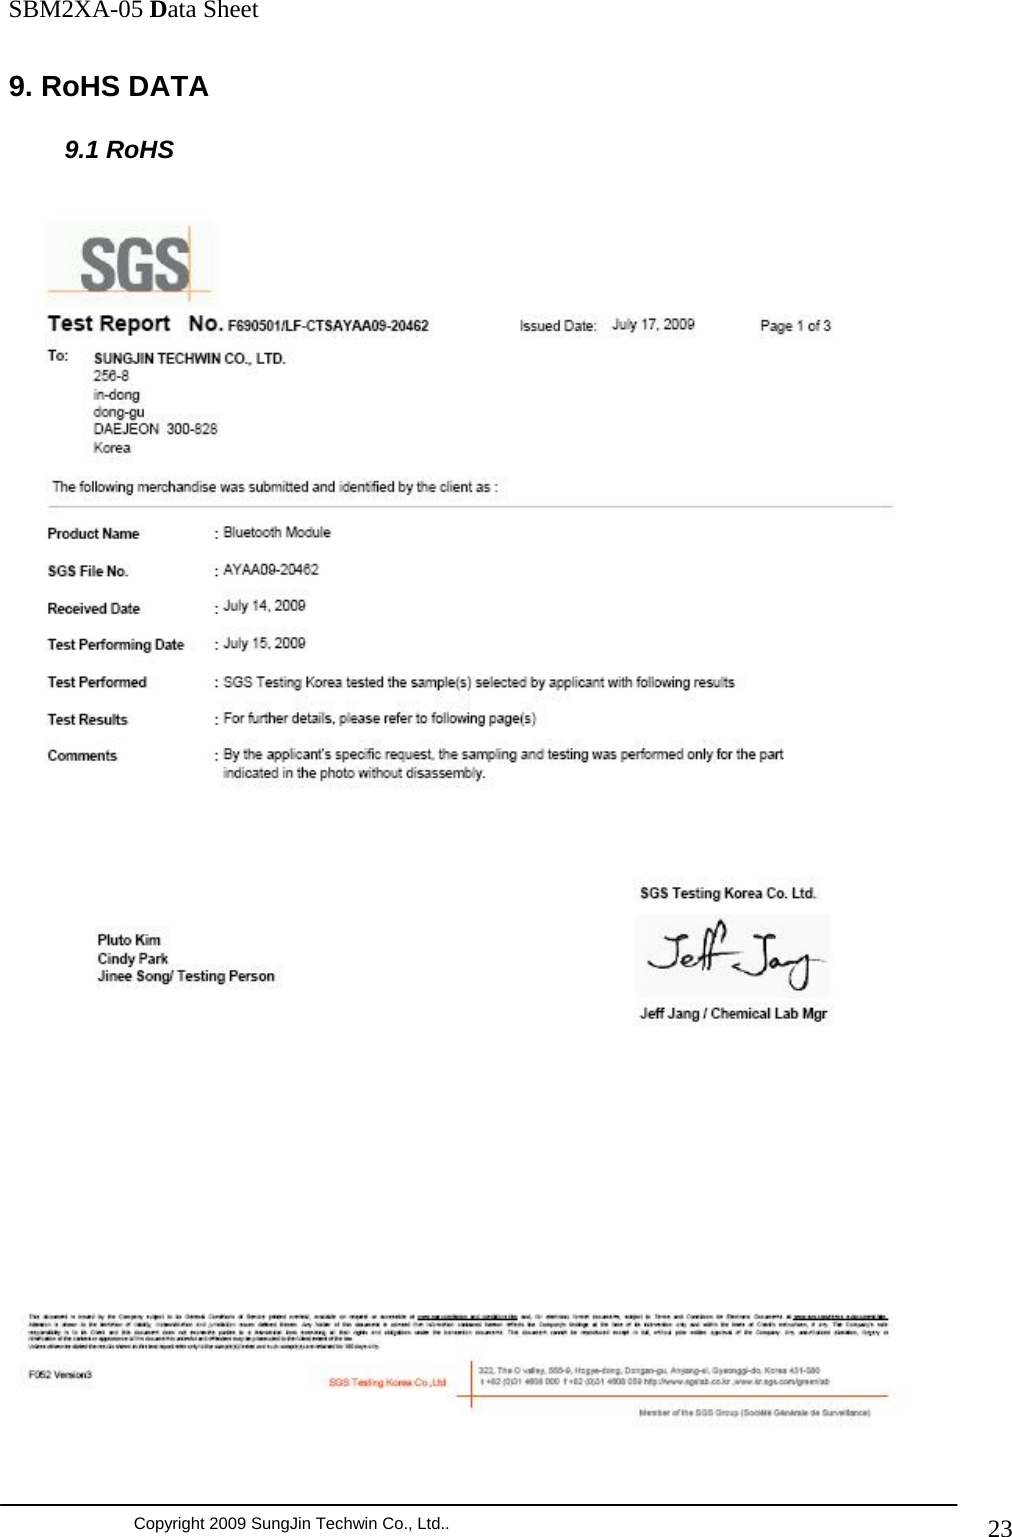               SBM2XA-05 Data Sheet  Copyright 2009 SungJin Techwin Co., Ltd..   239. RoHS DATA         9.1 RoHS   